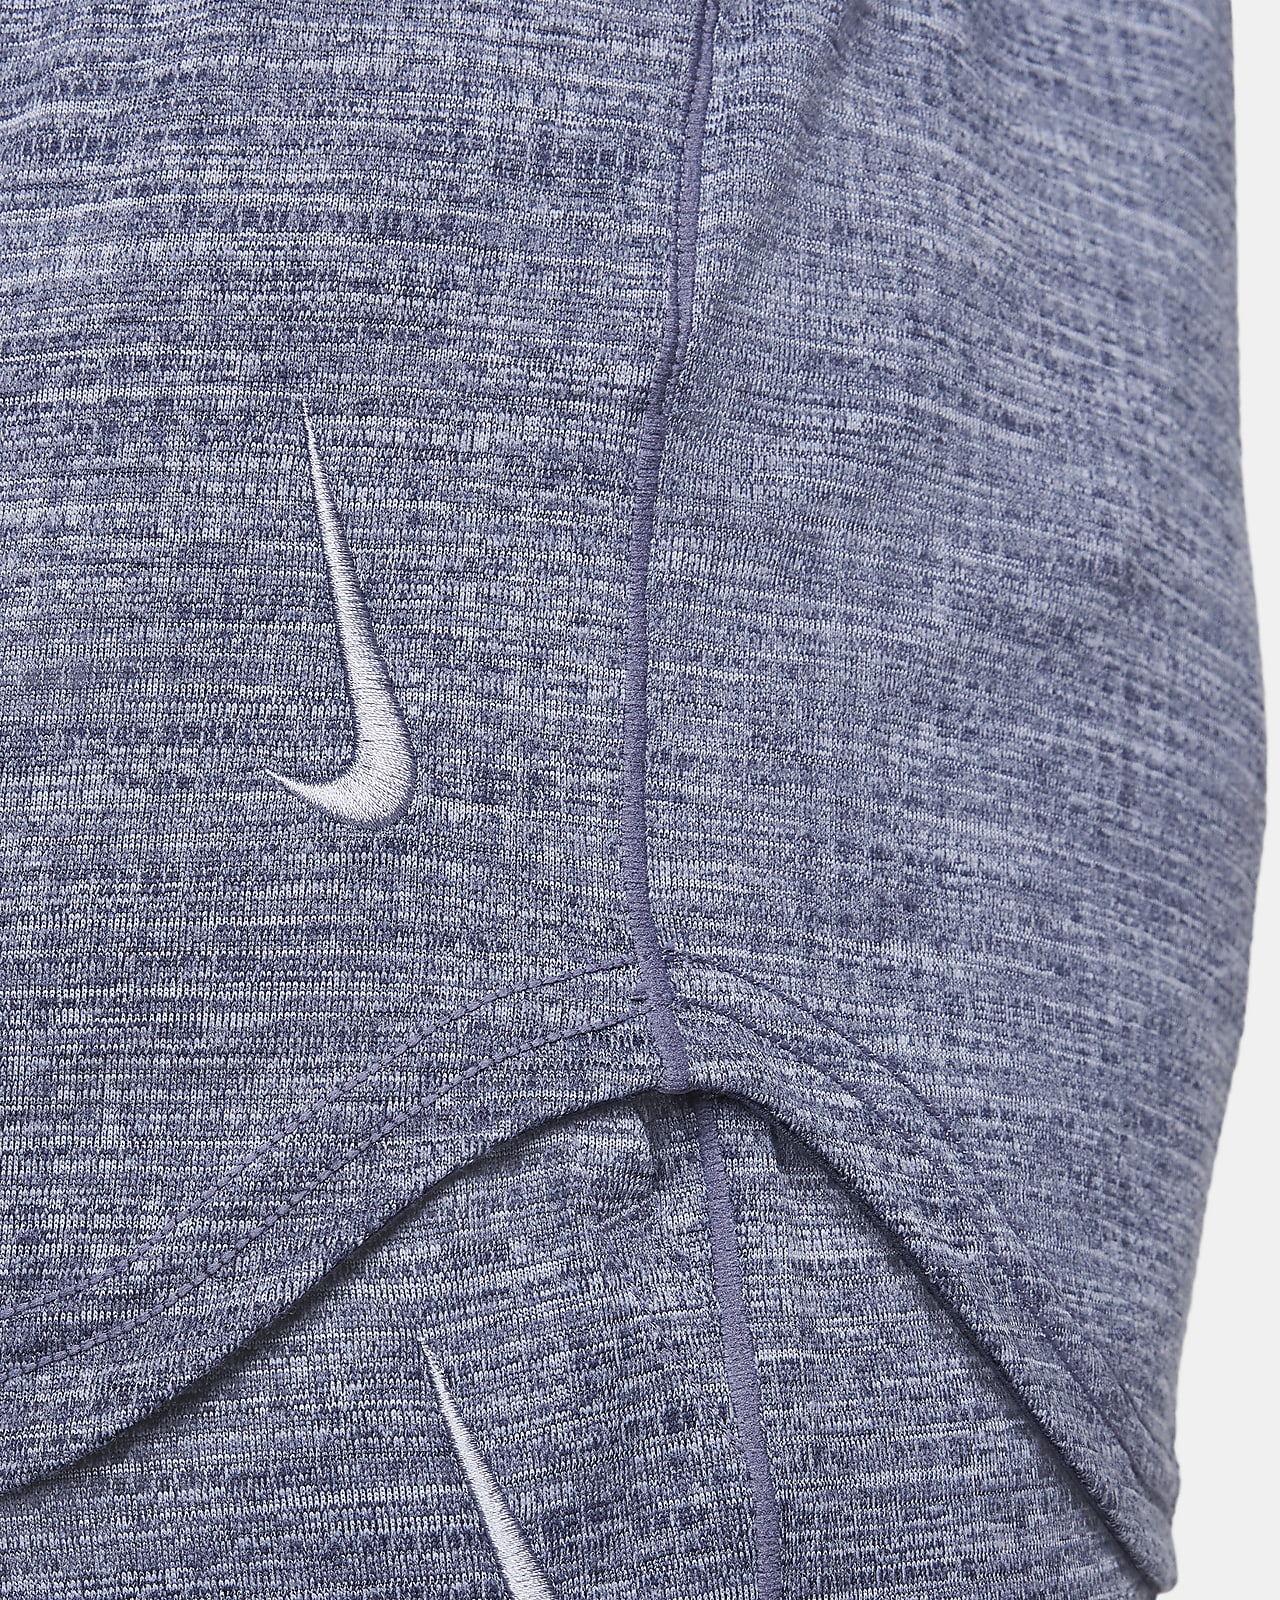 Nike Dri-FIT Yoga T-Shirt